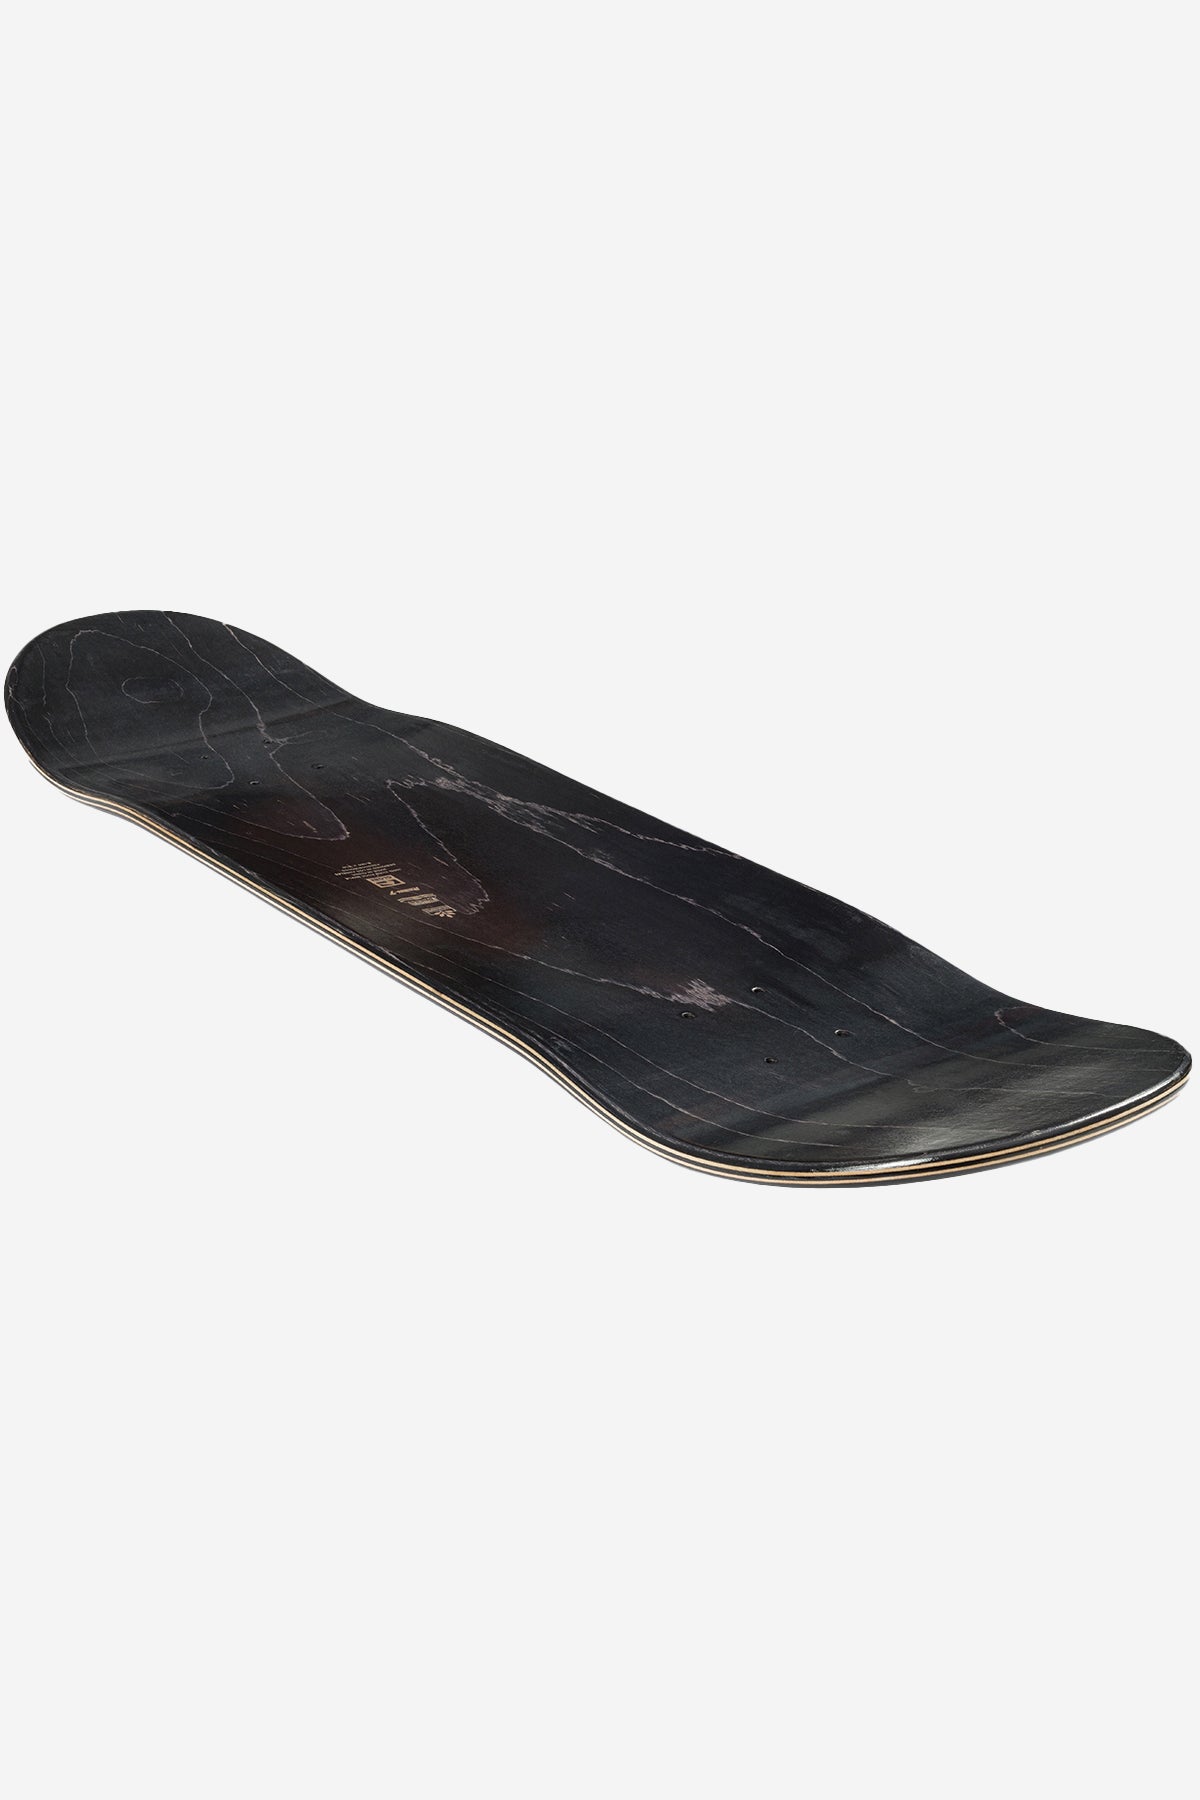 Globe - G1 Argo - Nero Camo - 8,125 Skateboard Deck